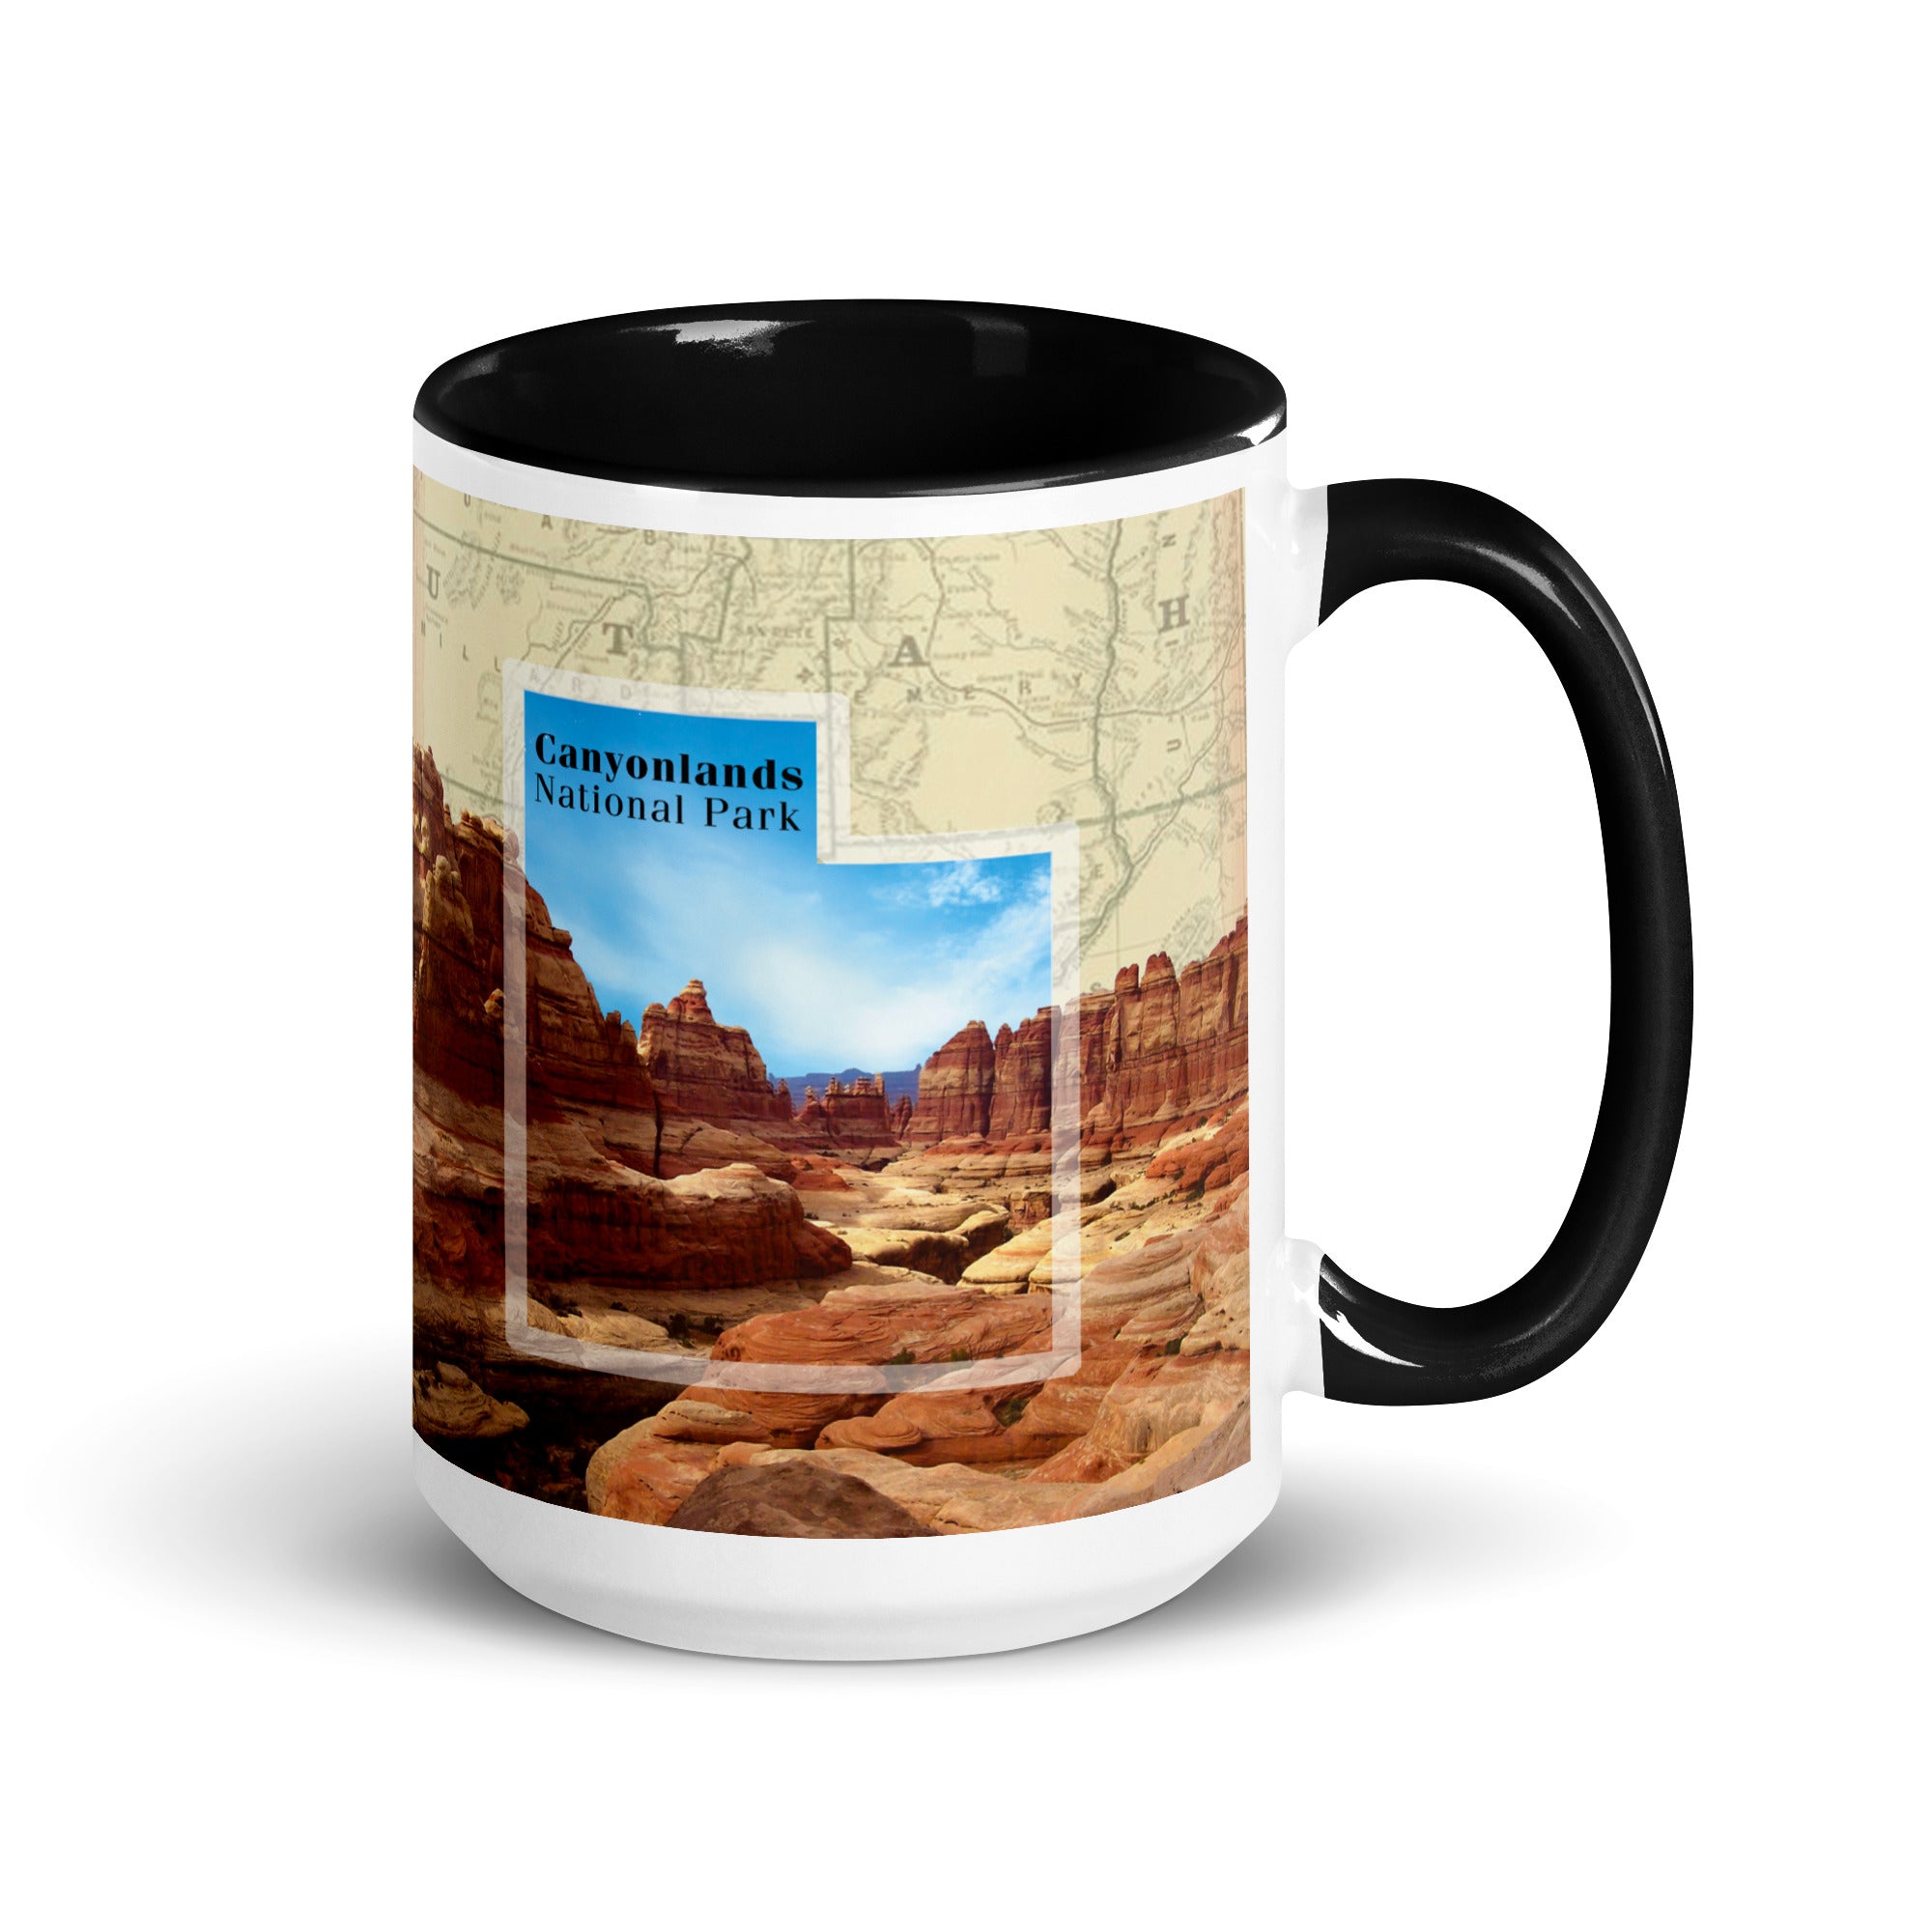 Canyonlands National Park Mug with Black Inside